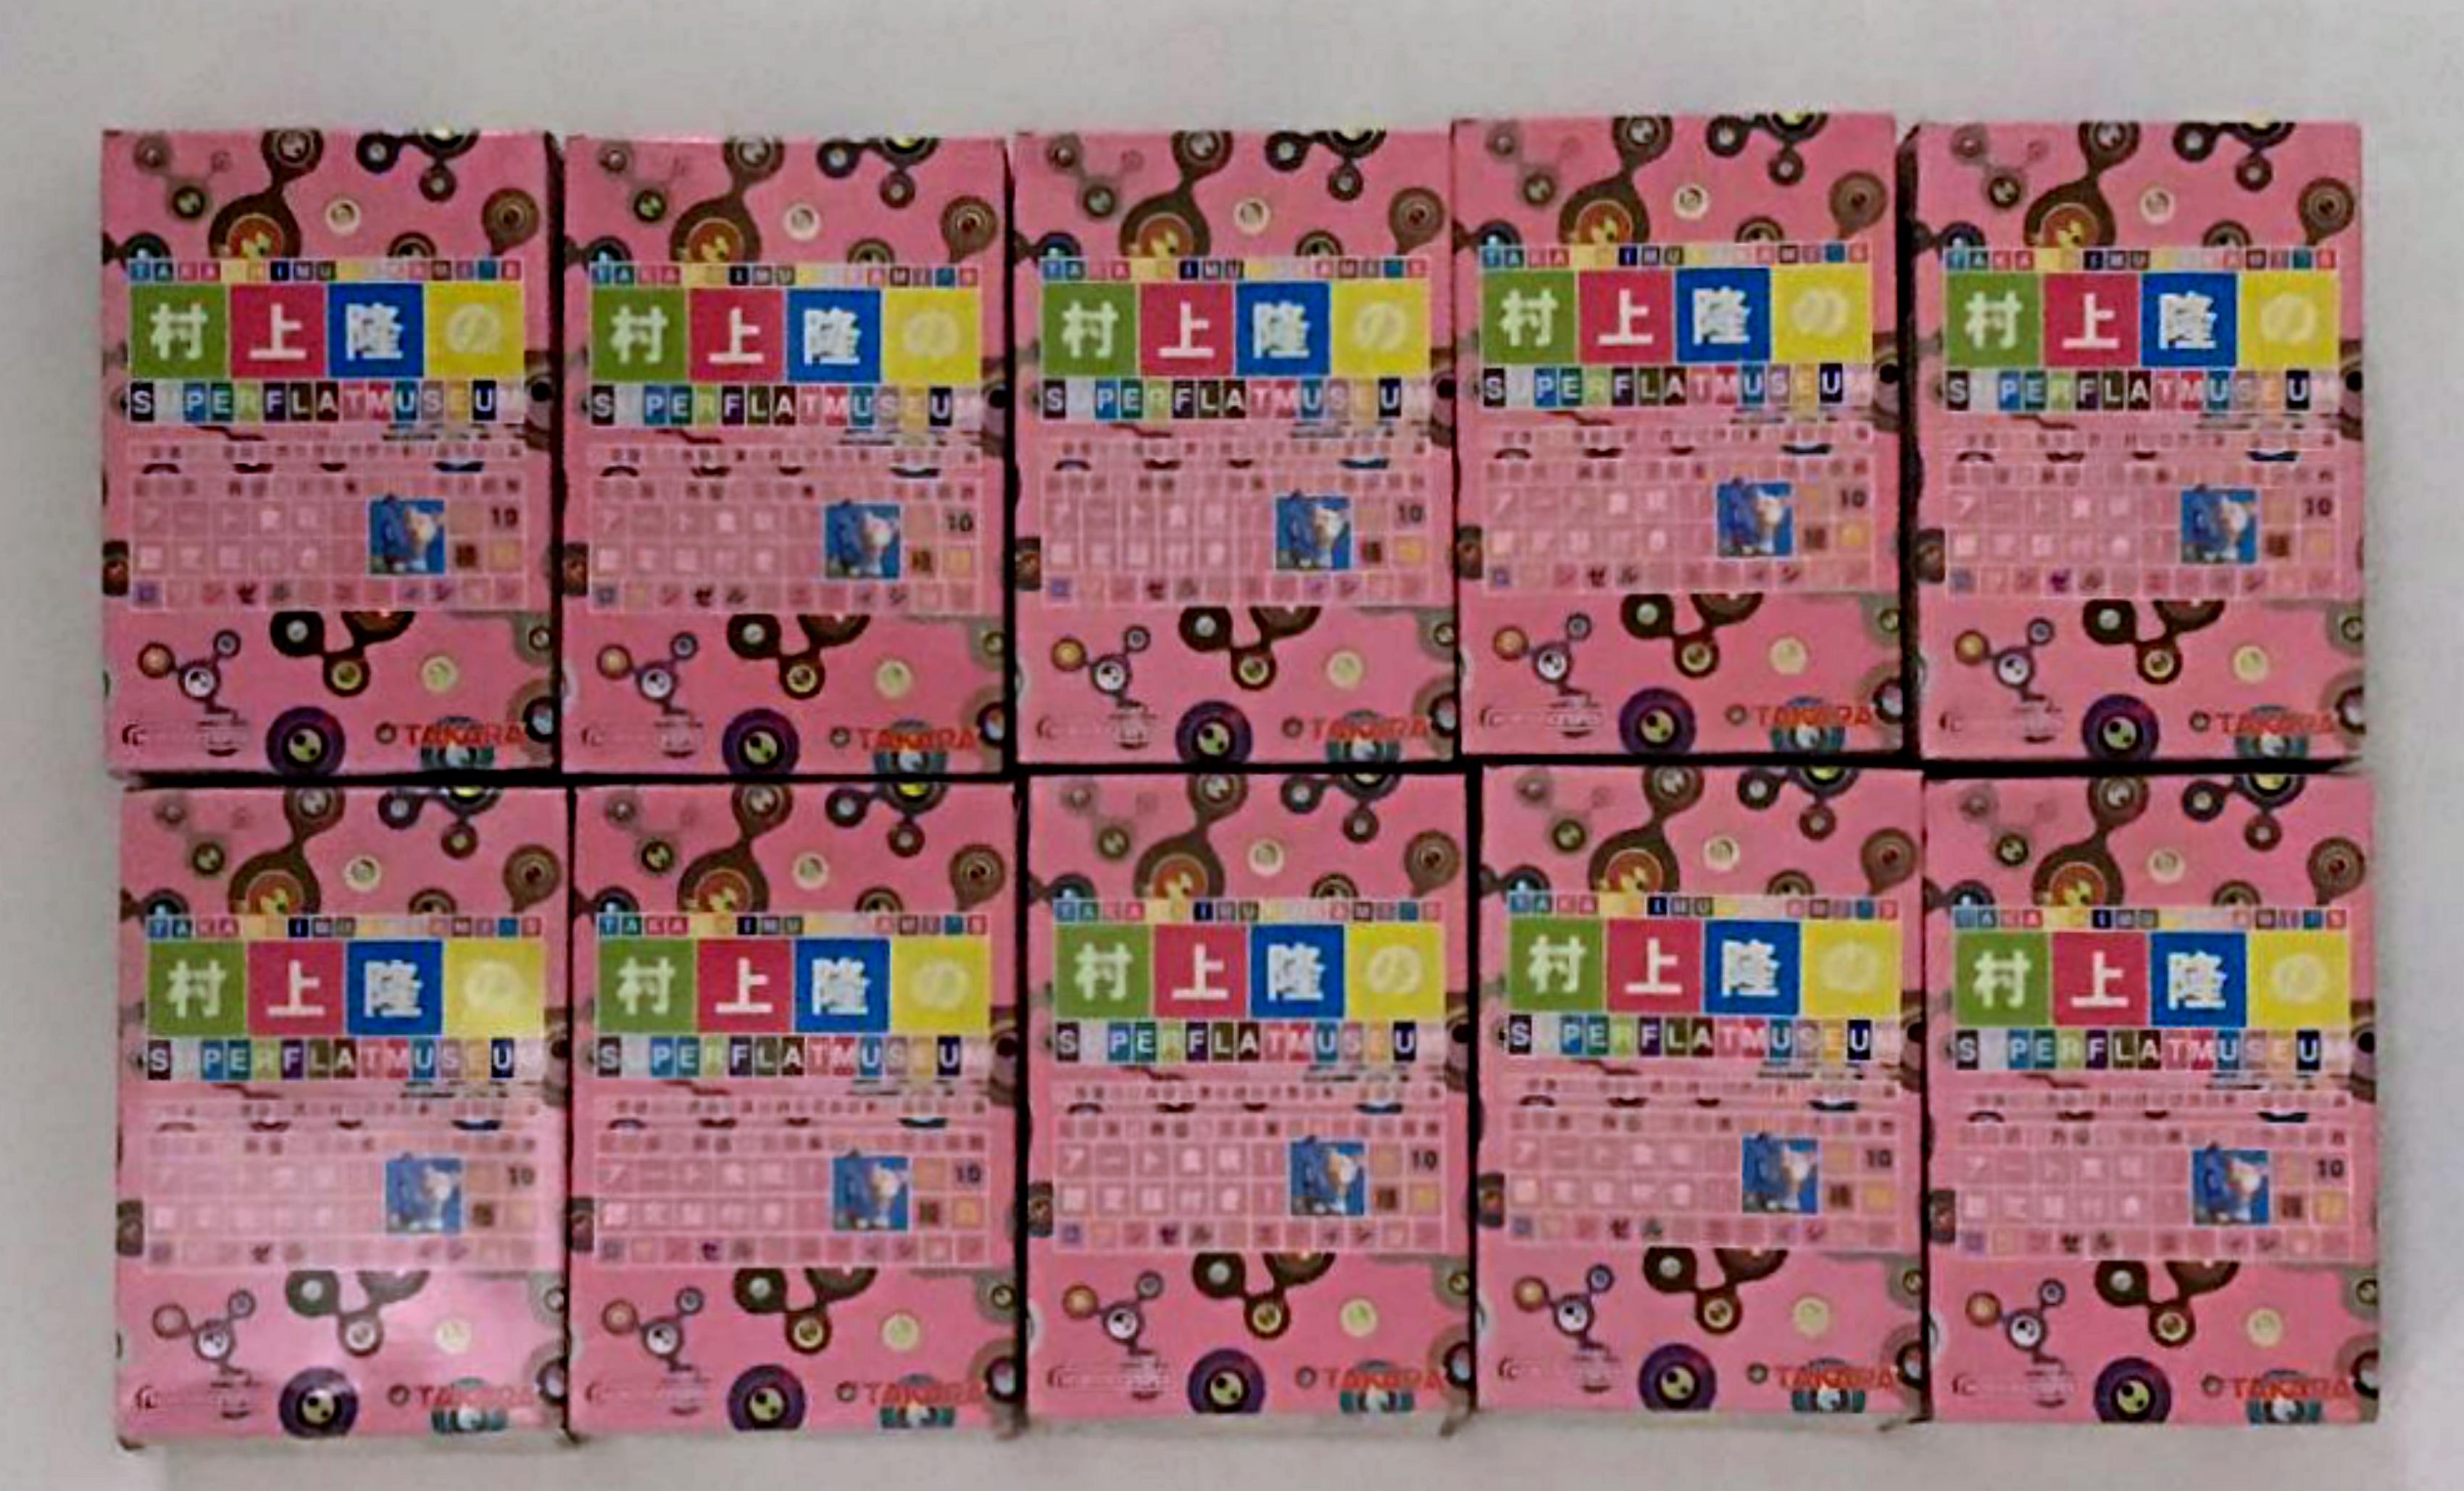 Super Flat Museum Toys (Ten Separate Works in Pink Boxes) - Art by Takashi Murakami